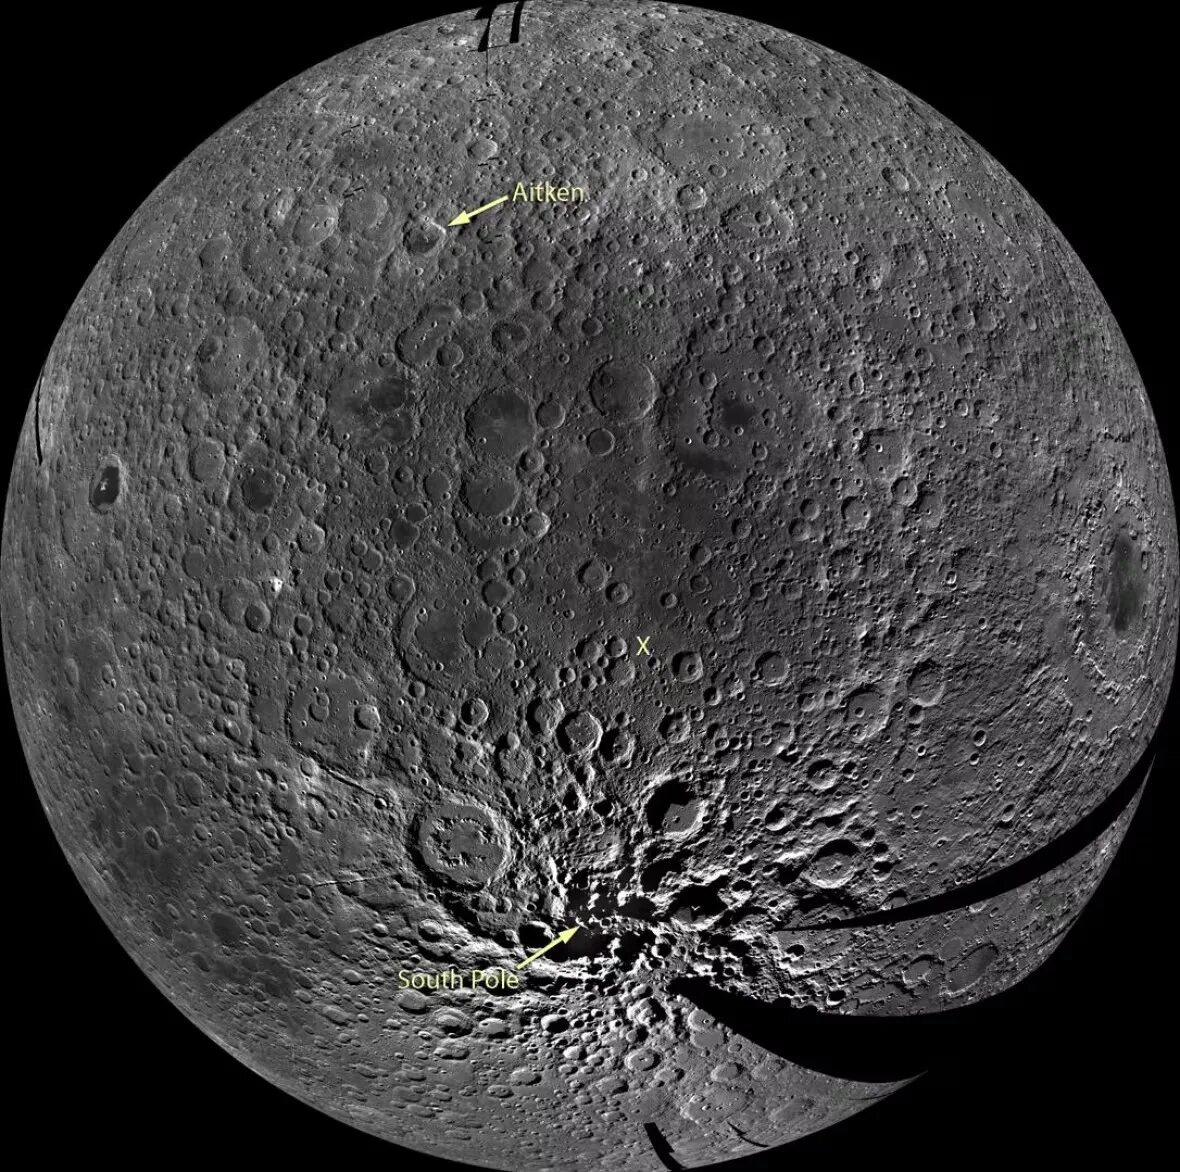 Кратер Эйткен. Эйткен кратер на Луне. Южный полюс Эйткен. Бассейн Южный полюс Эйткен на Луне.